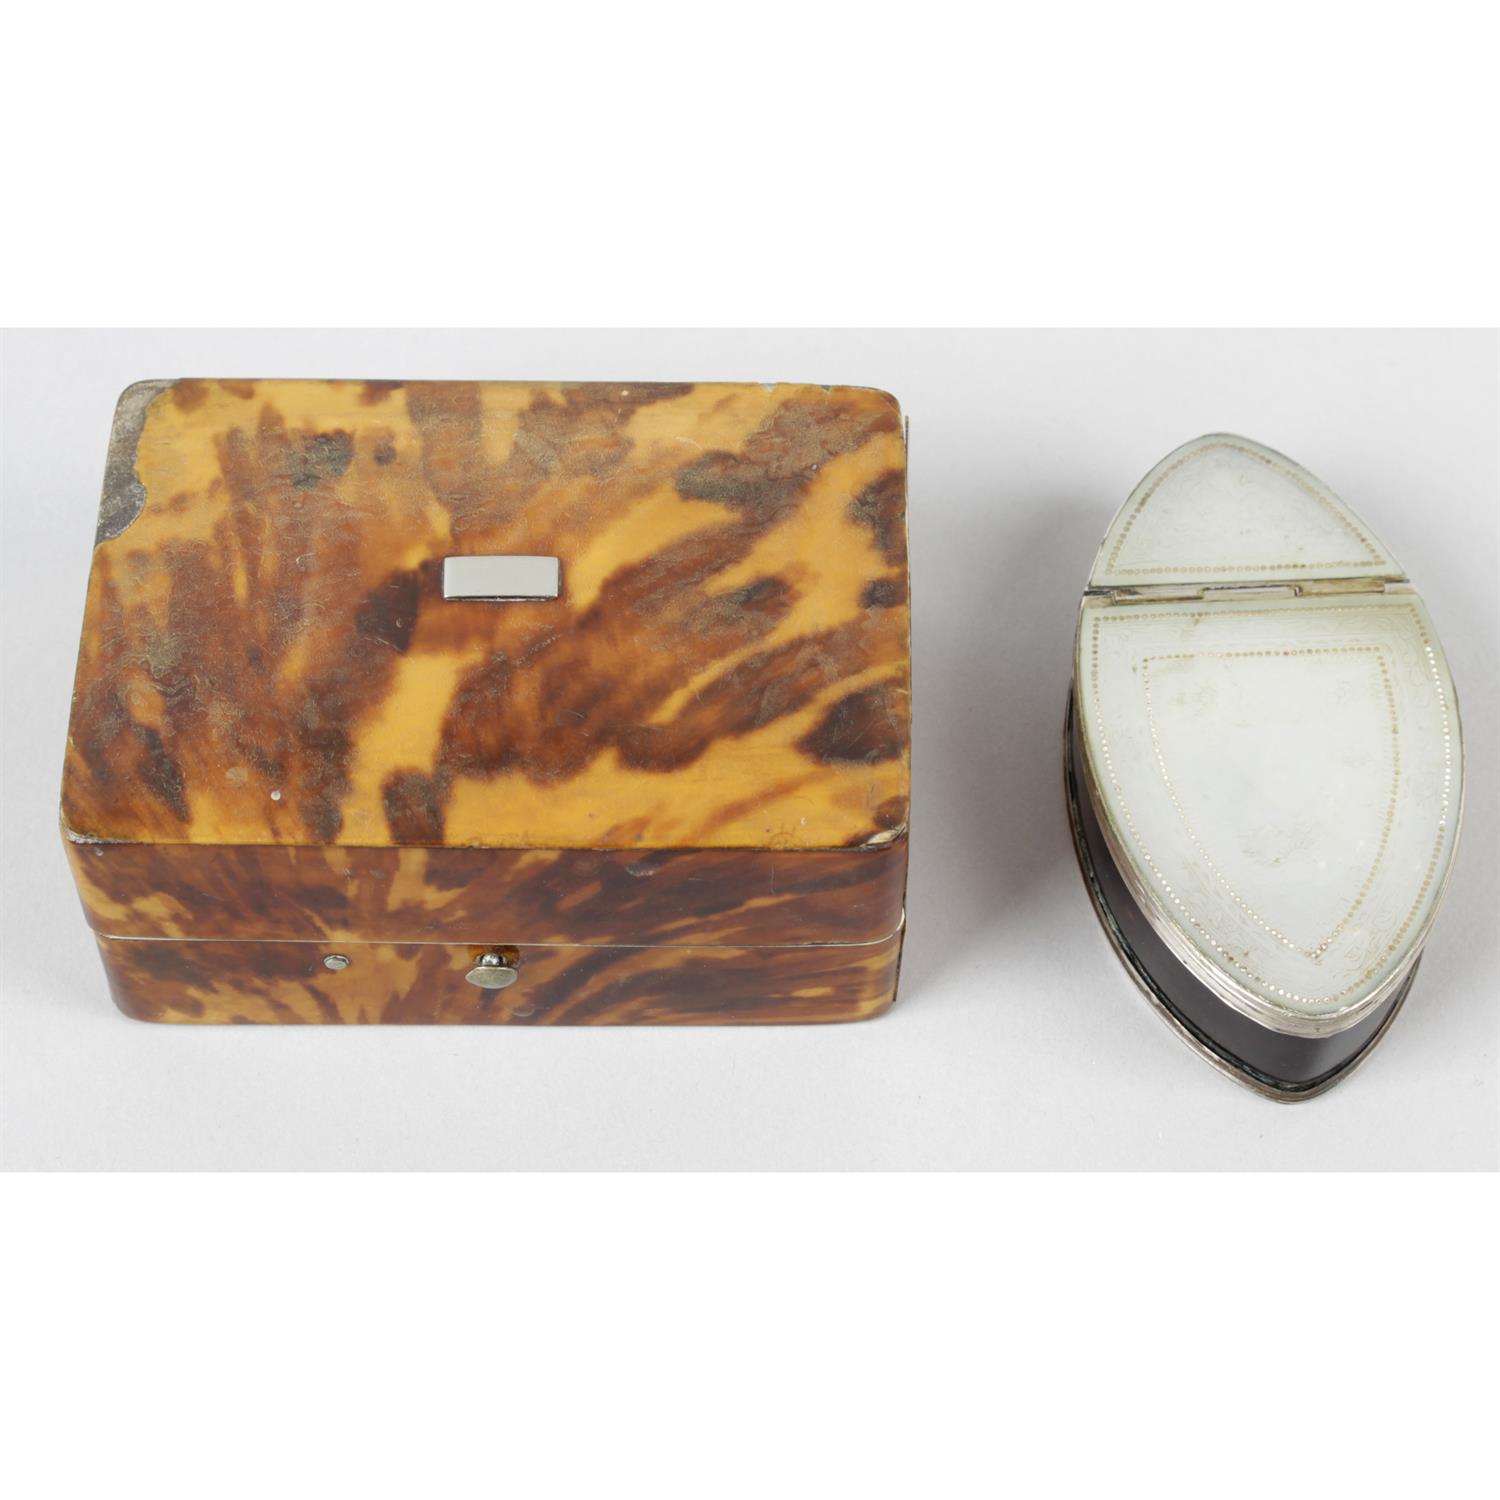 A tortoiseshell & mother-of-pearl snuff box; together with a further tortoiseshell box (both a.f).